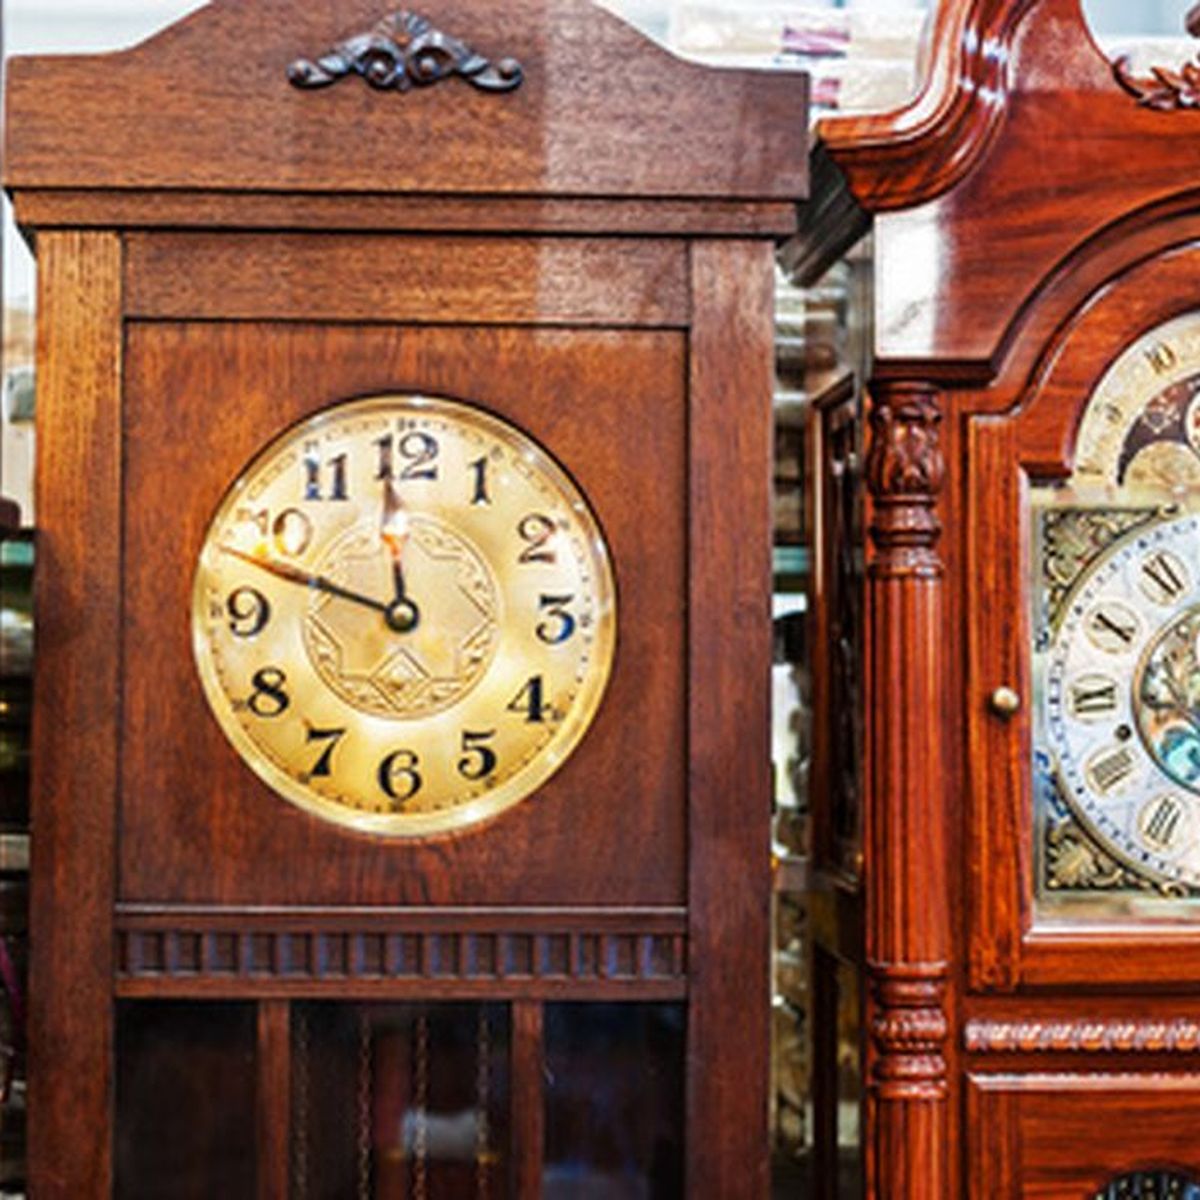 Outstanding clock by Howard Miller